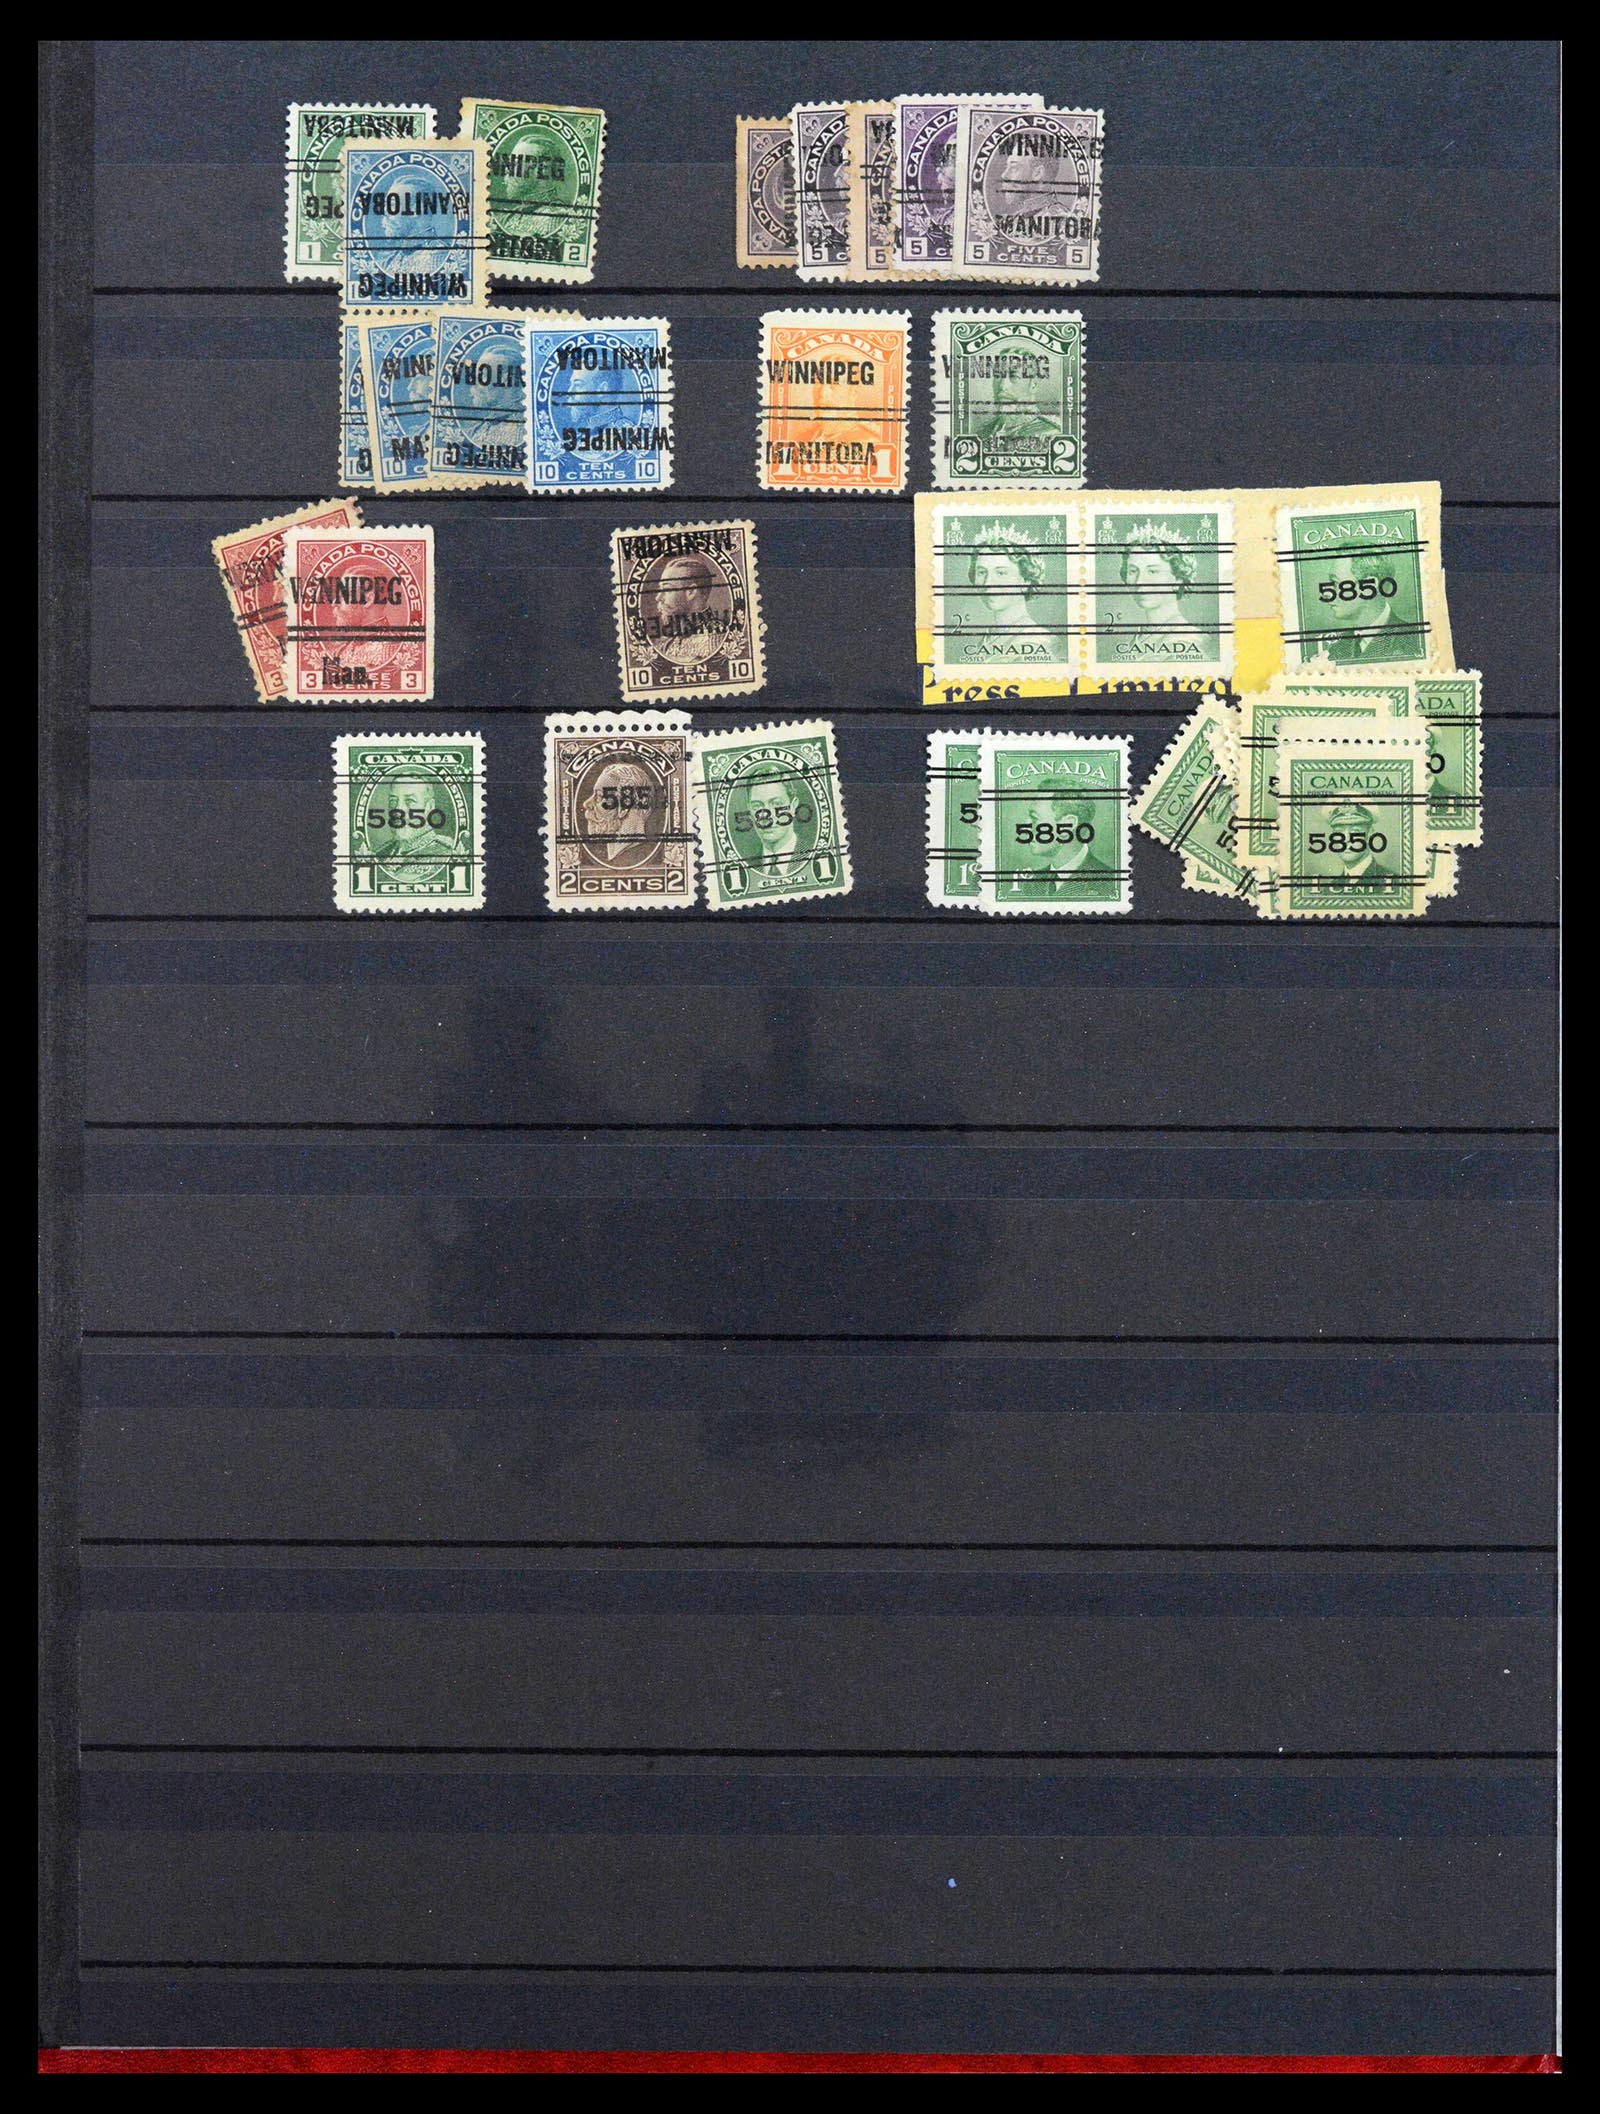 39484 0012 - Stamp collection 39484 Canada precancels 1880-1970.